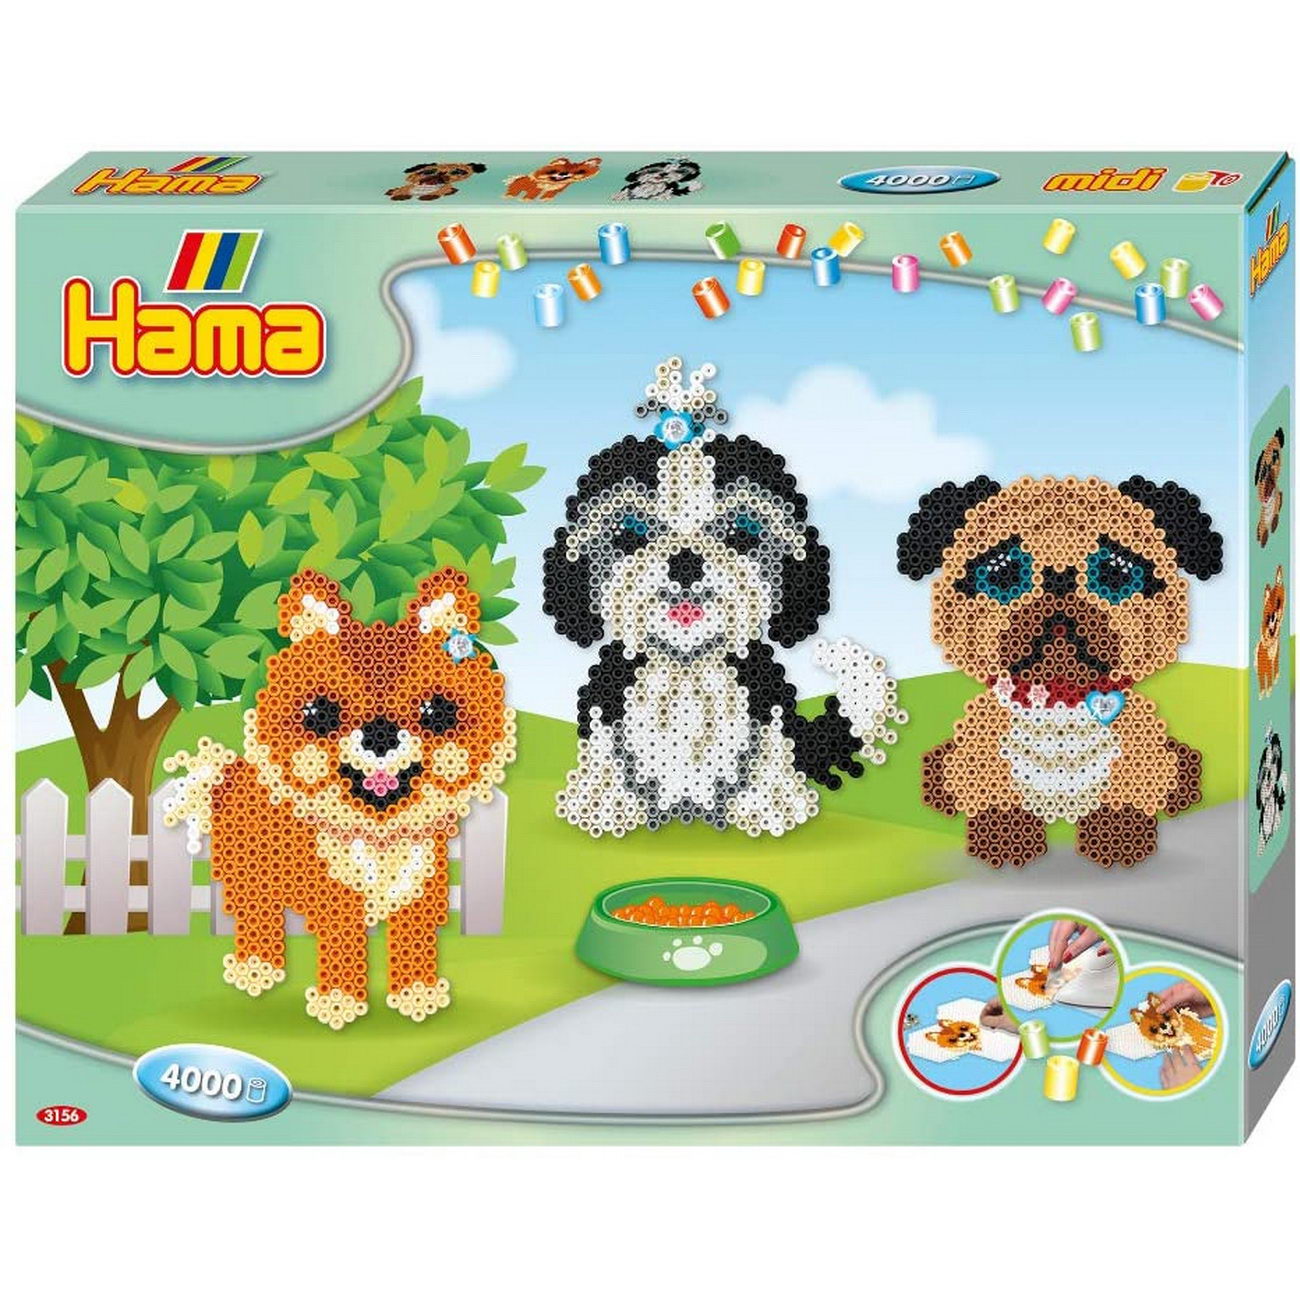 Hama Geschenkpackung Hunde Dogs Delight (Hama 3156)